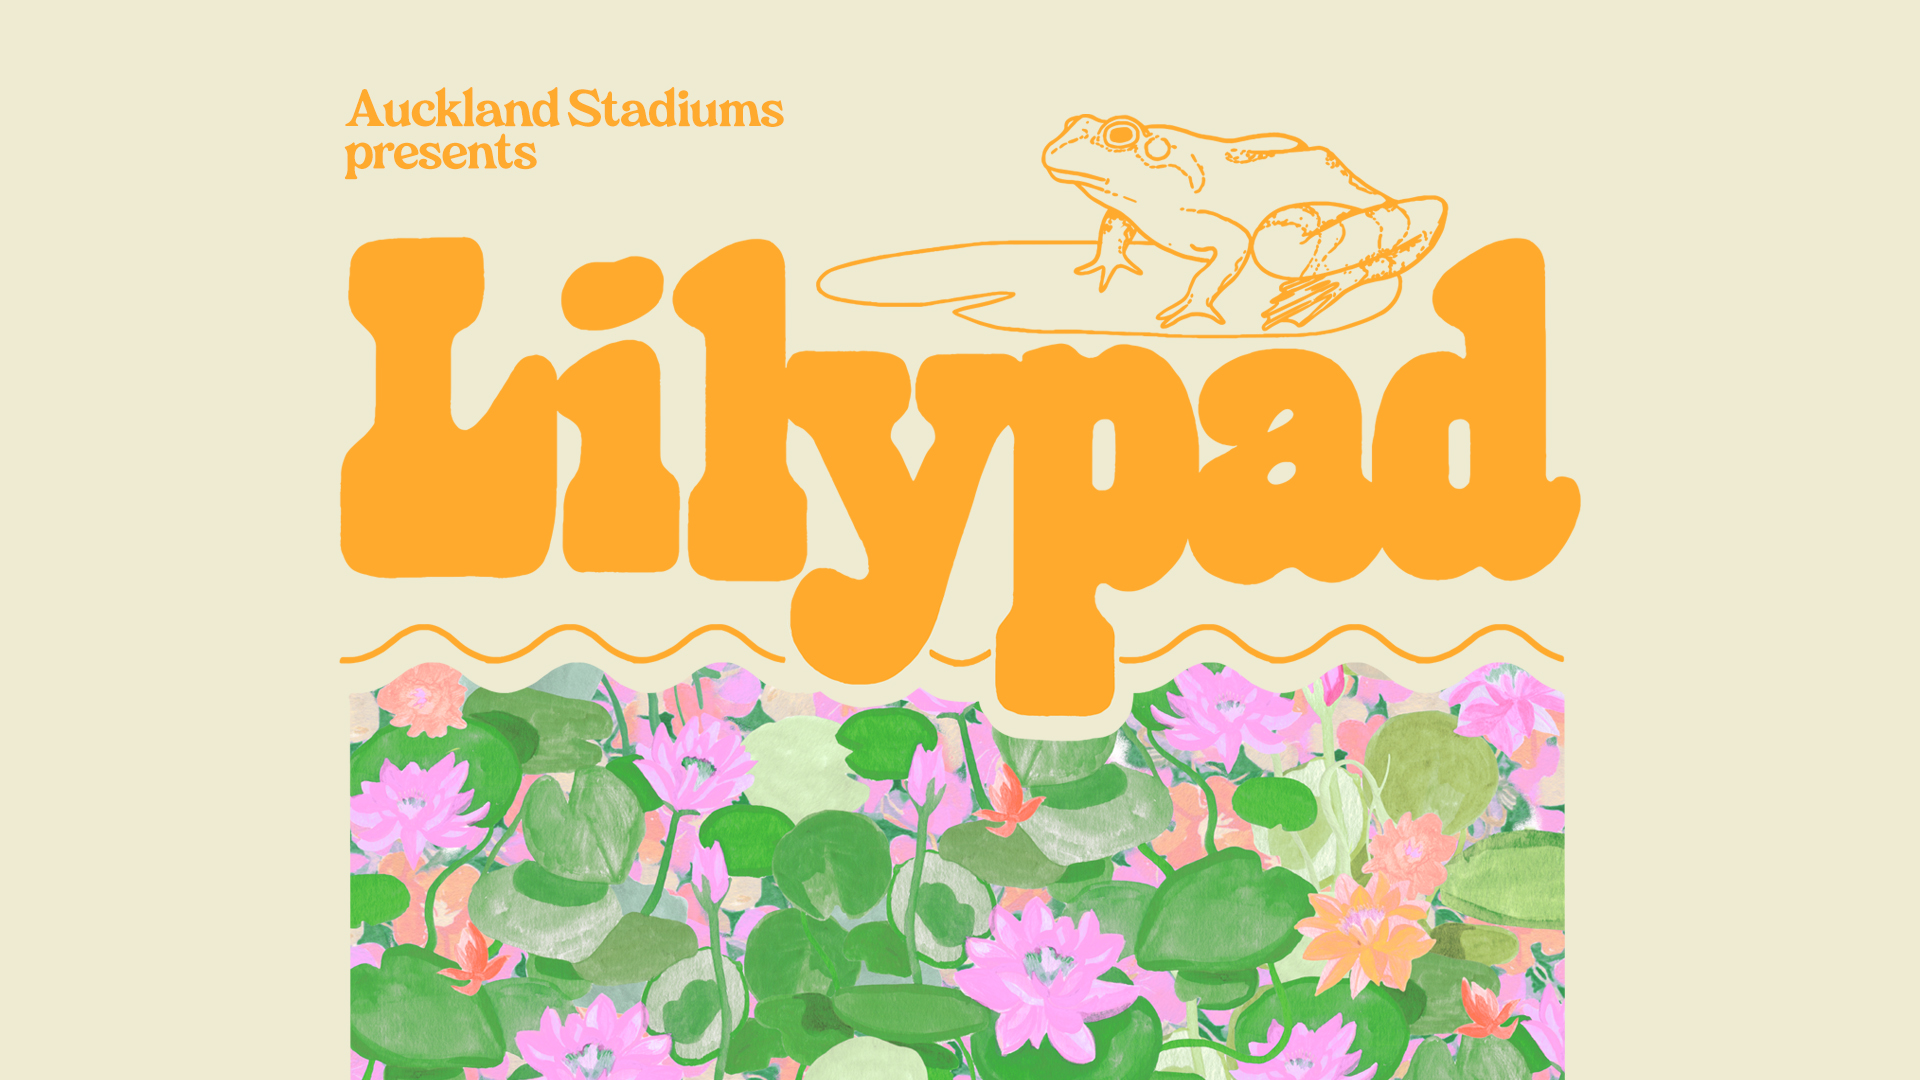 Lilypad Concert